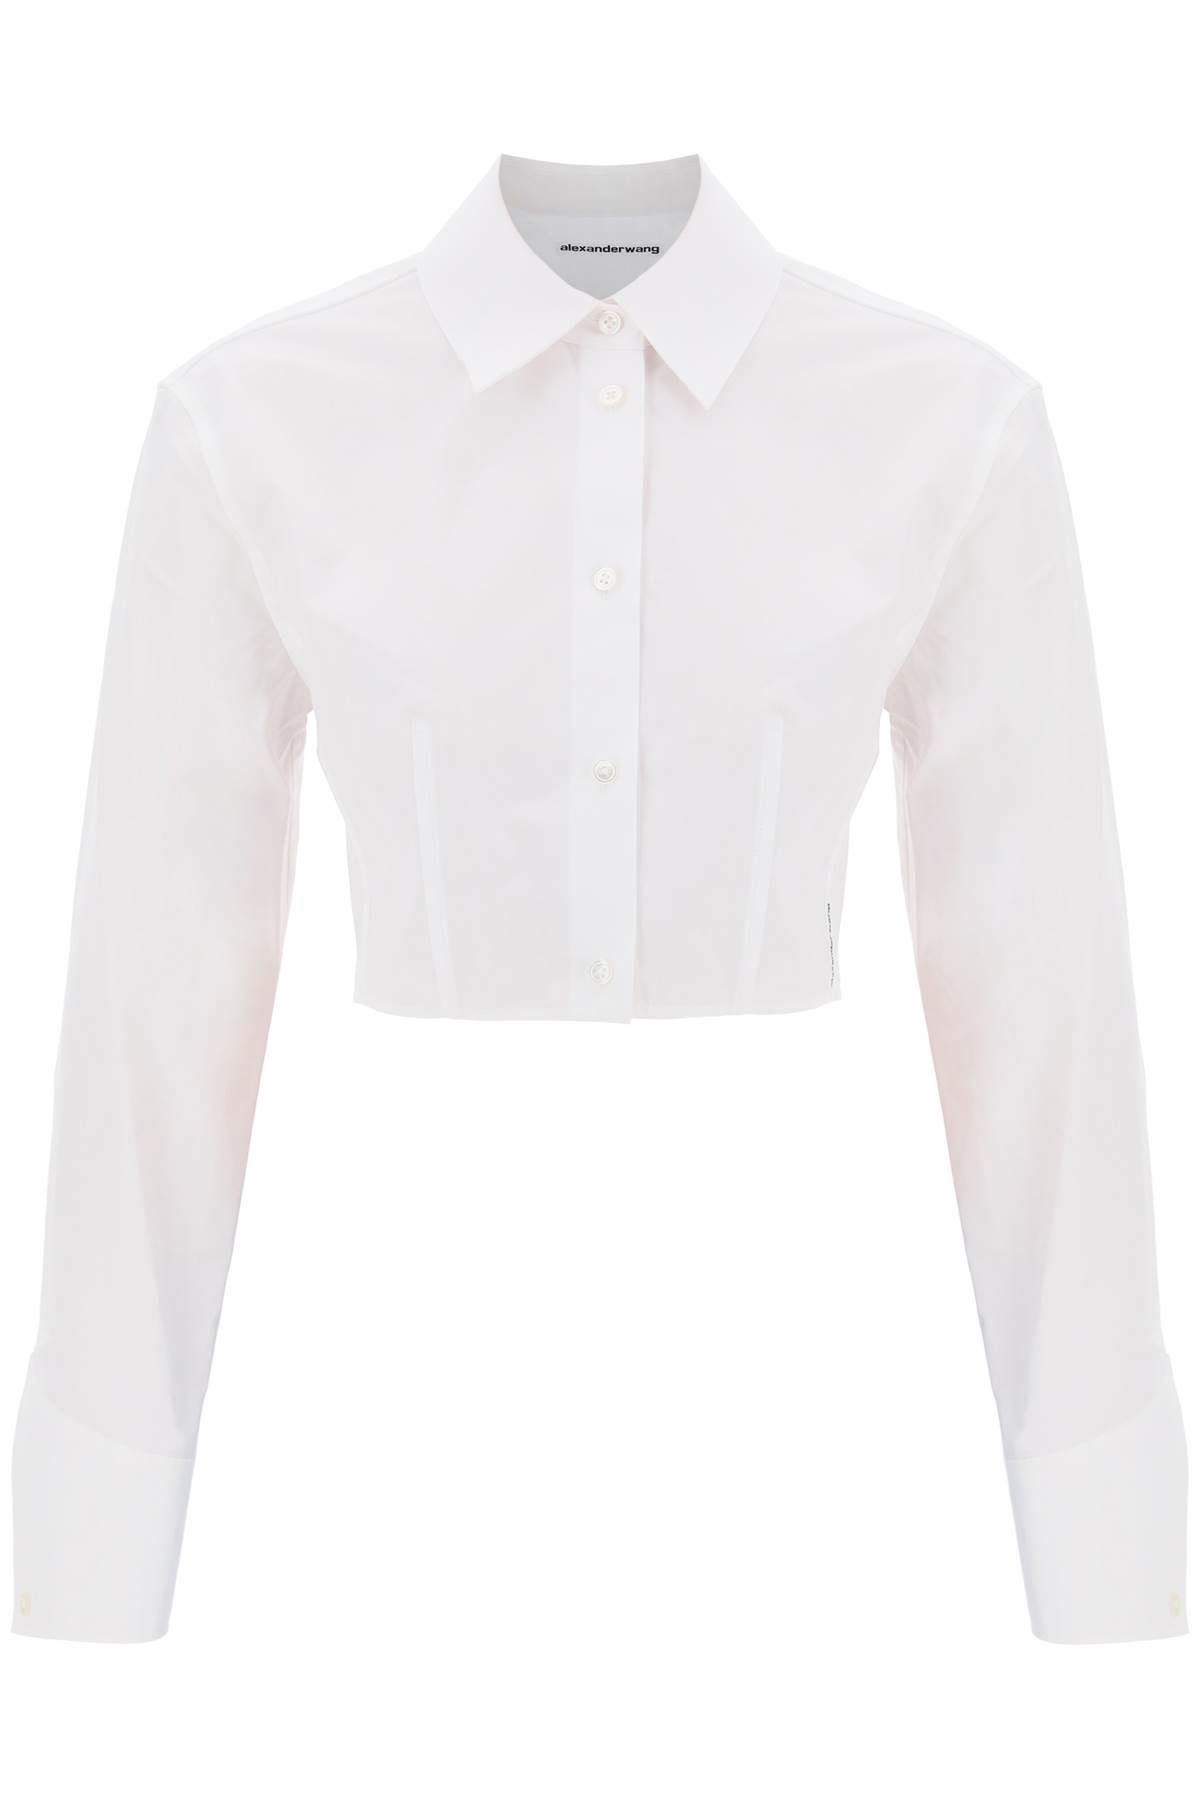 Shop Alexander Wang Short Structured Cotton Shirt In White